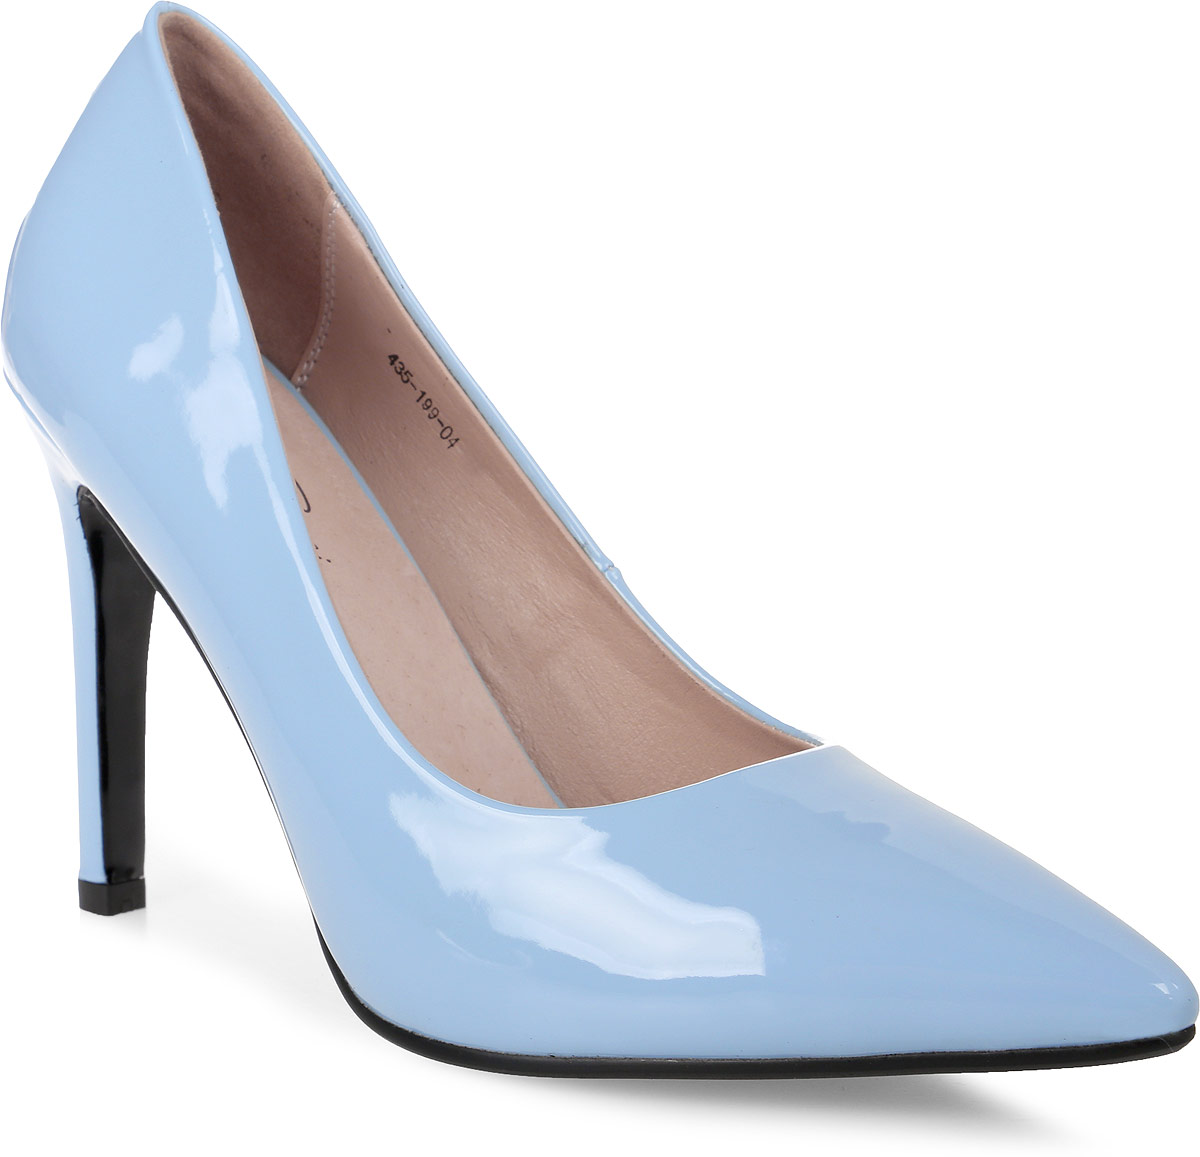 Туфли женские Dino Ricci, цвет: голубой. 435-199-04. Размер 39